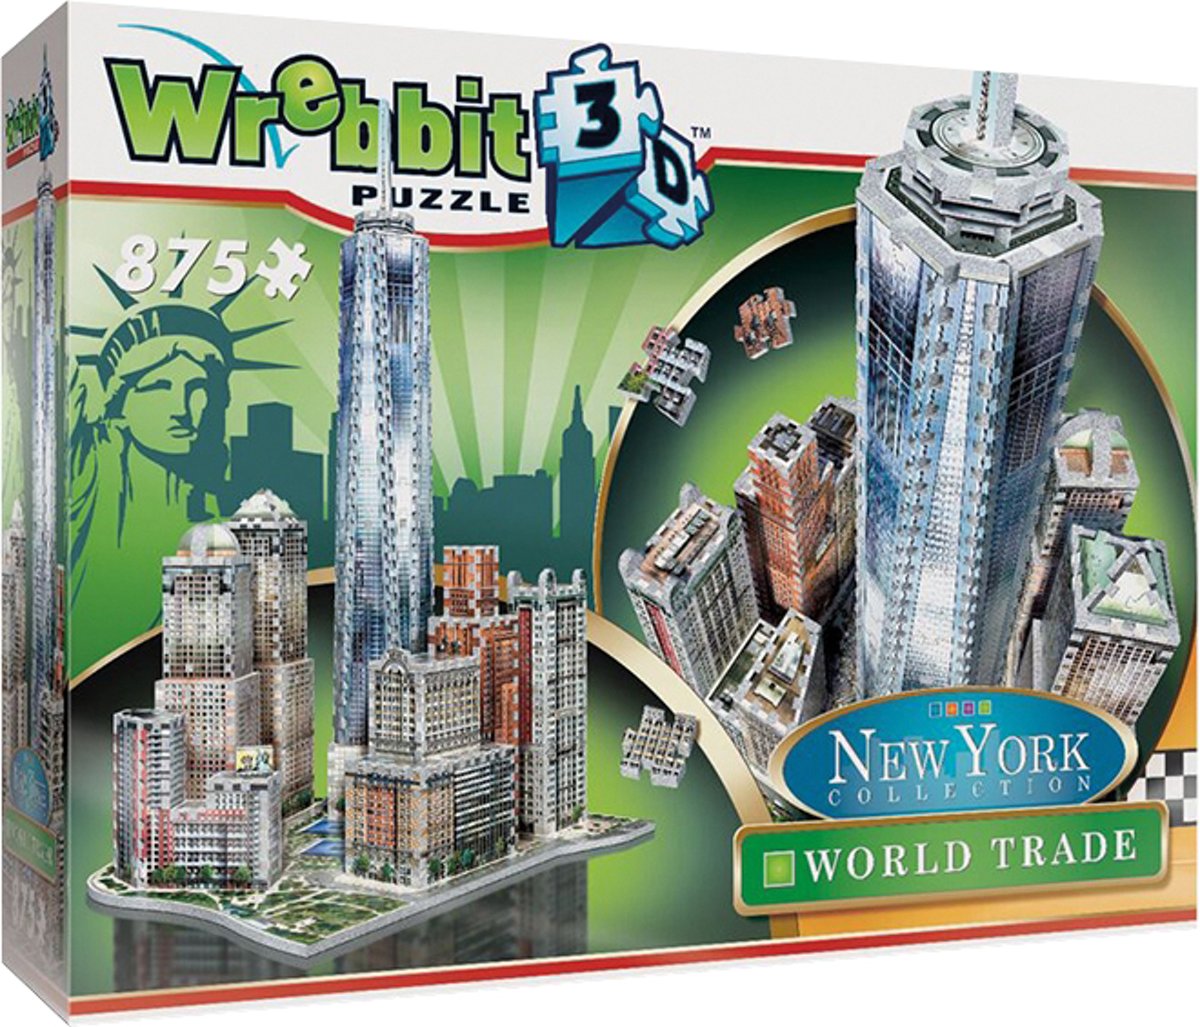 Wrebbit 3D Puzzel - New York, downtown World Trade Center - 875 stukjes